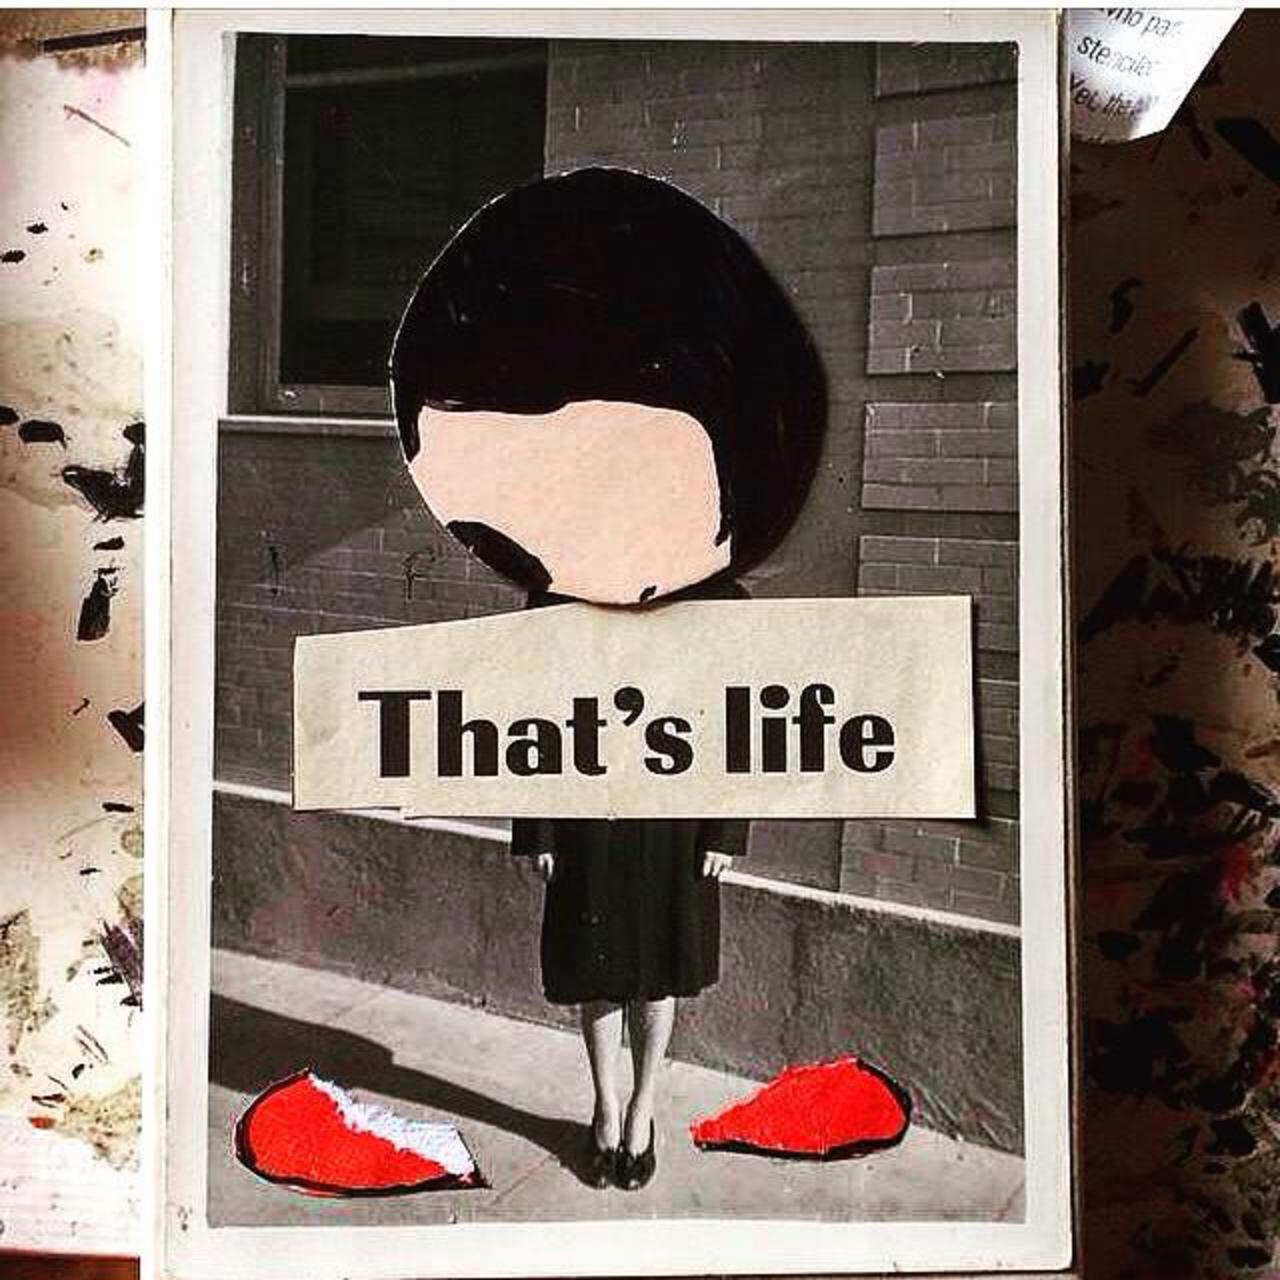 " That's Life "
by @PhoebeNewYork 
#streetart #stickers #wheatpaste #newyork #art #street #artist #Collage #graffiti http://t.co/nGzPiZhNaj